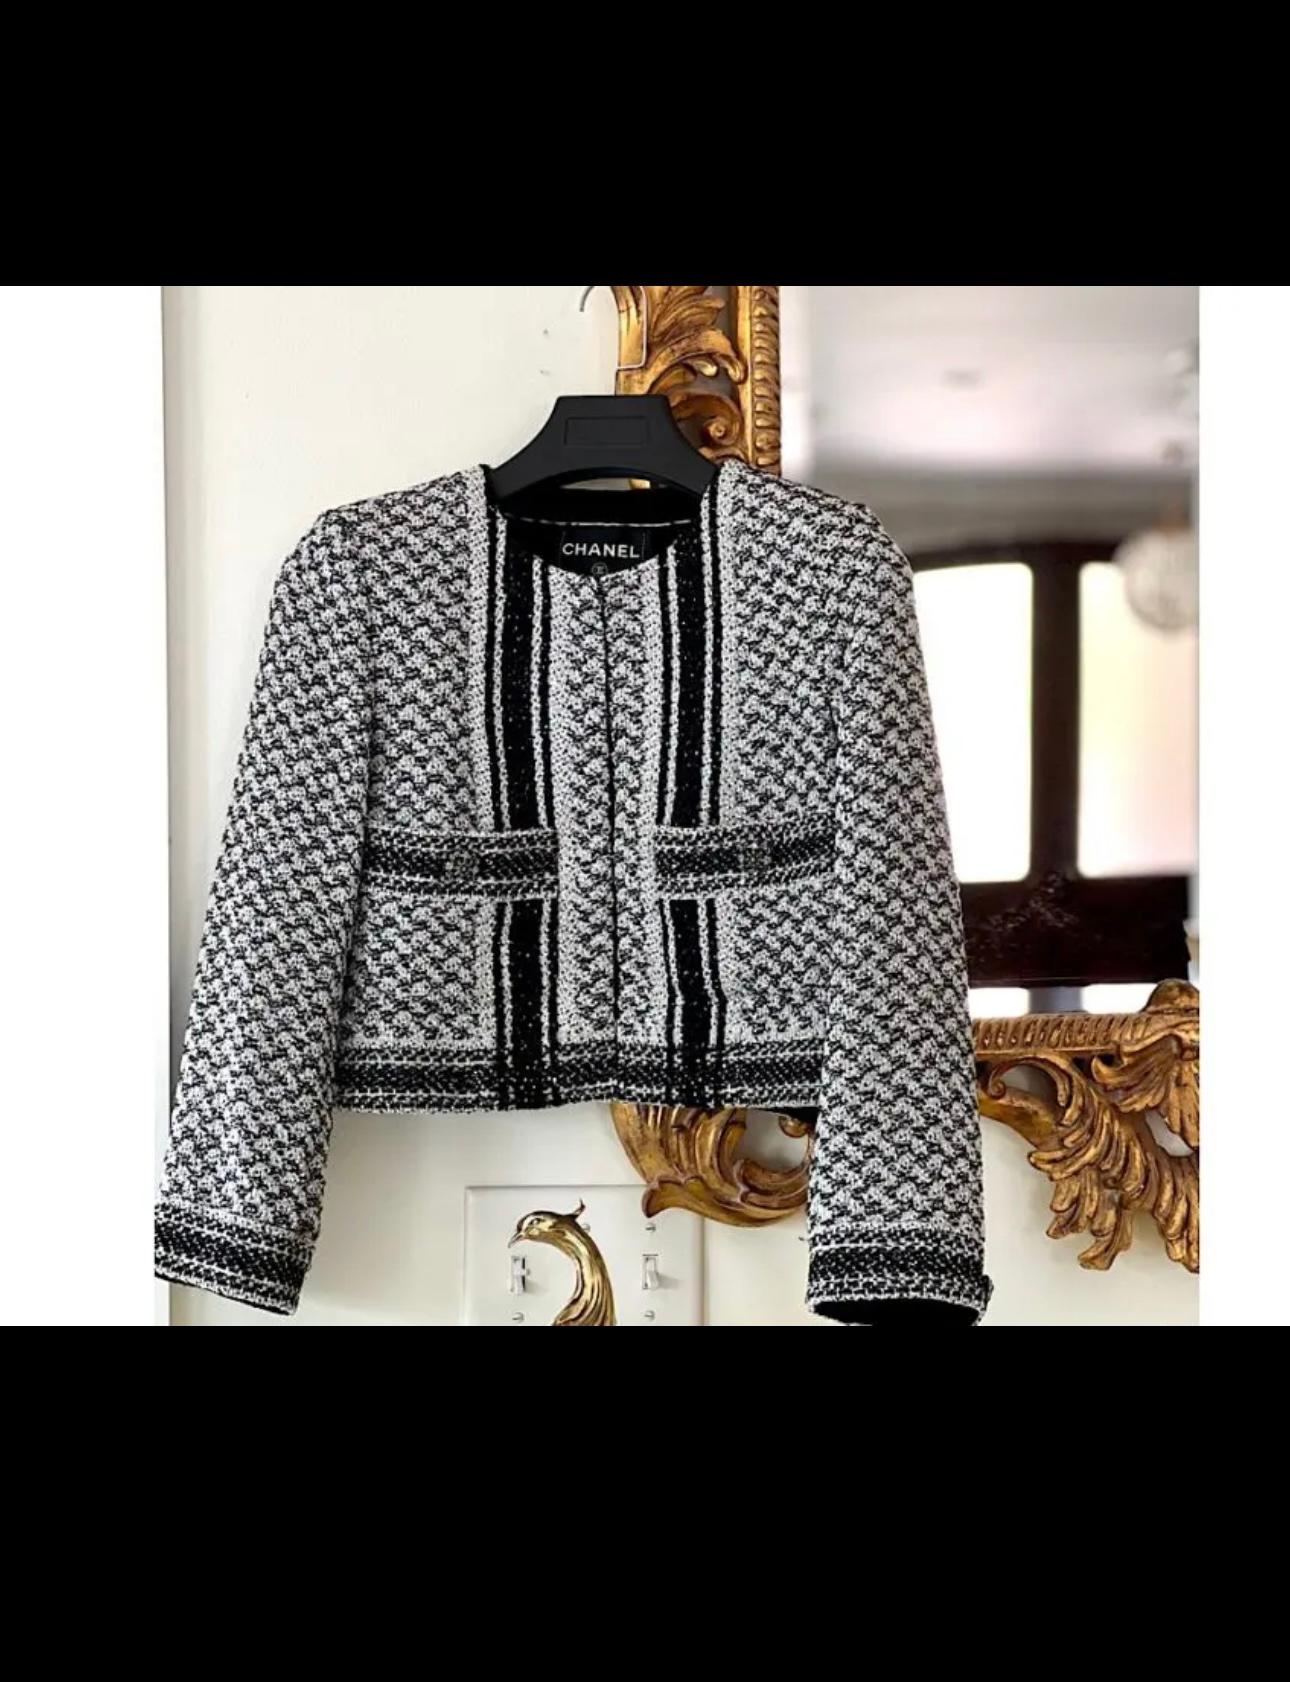 Chanel New Gigi Hadid Style Lesage Tweed Jacket For Sale 12